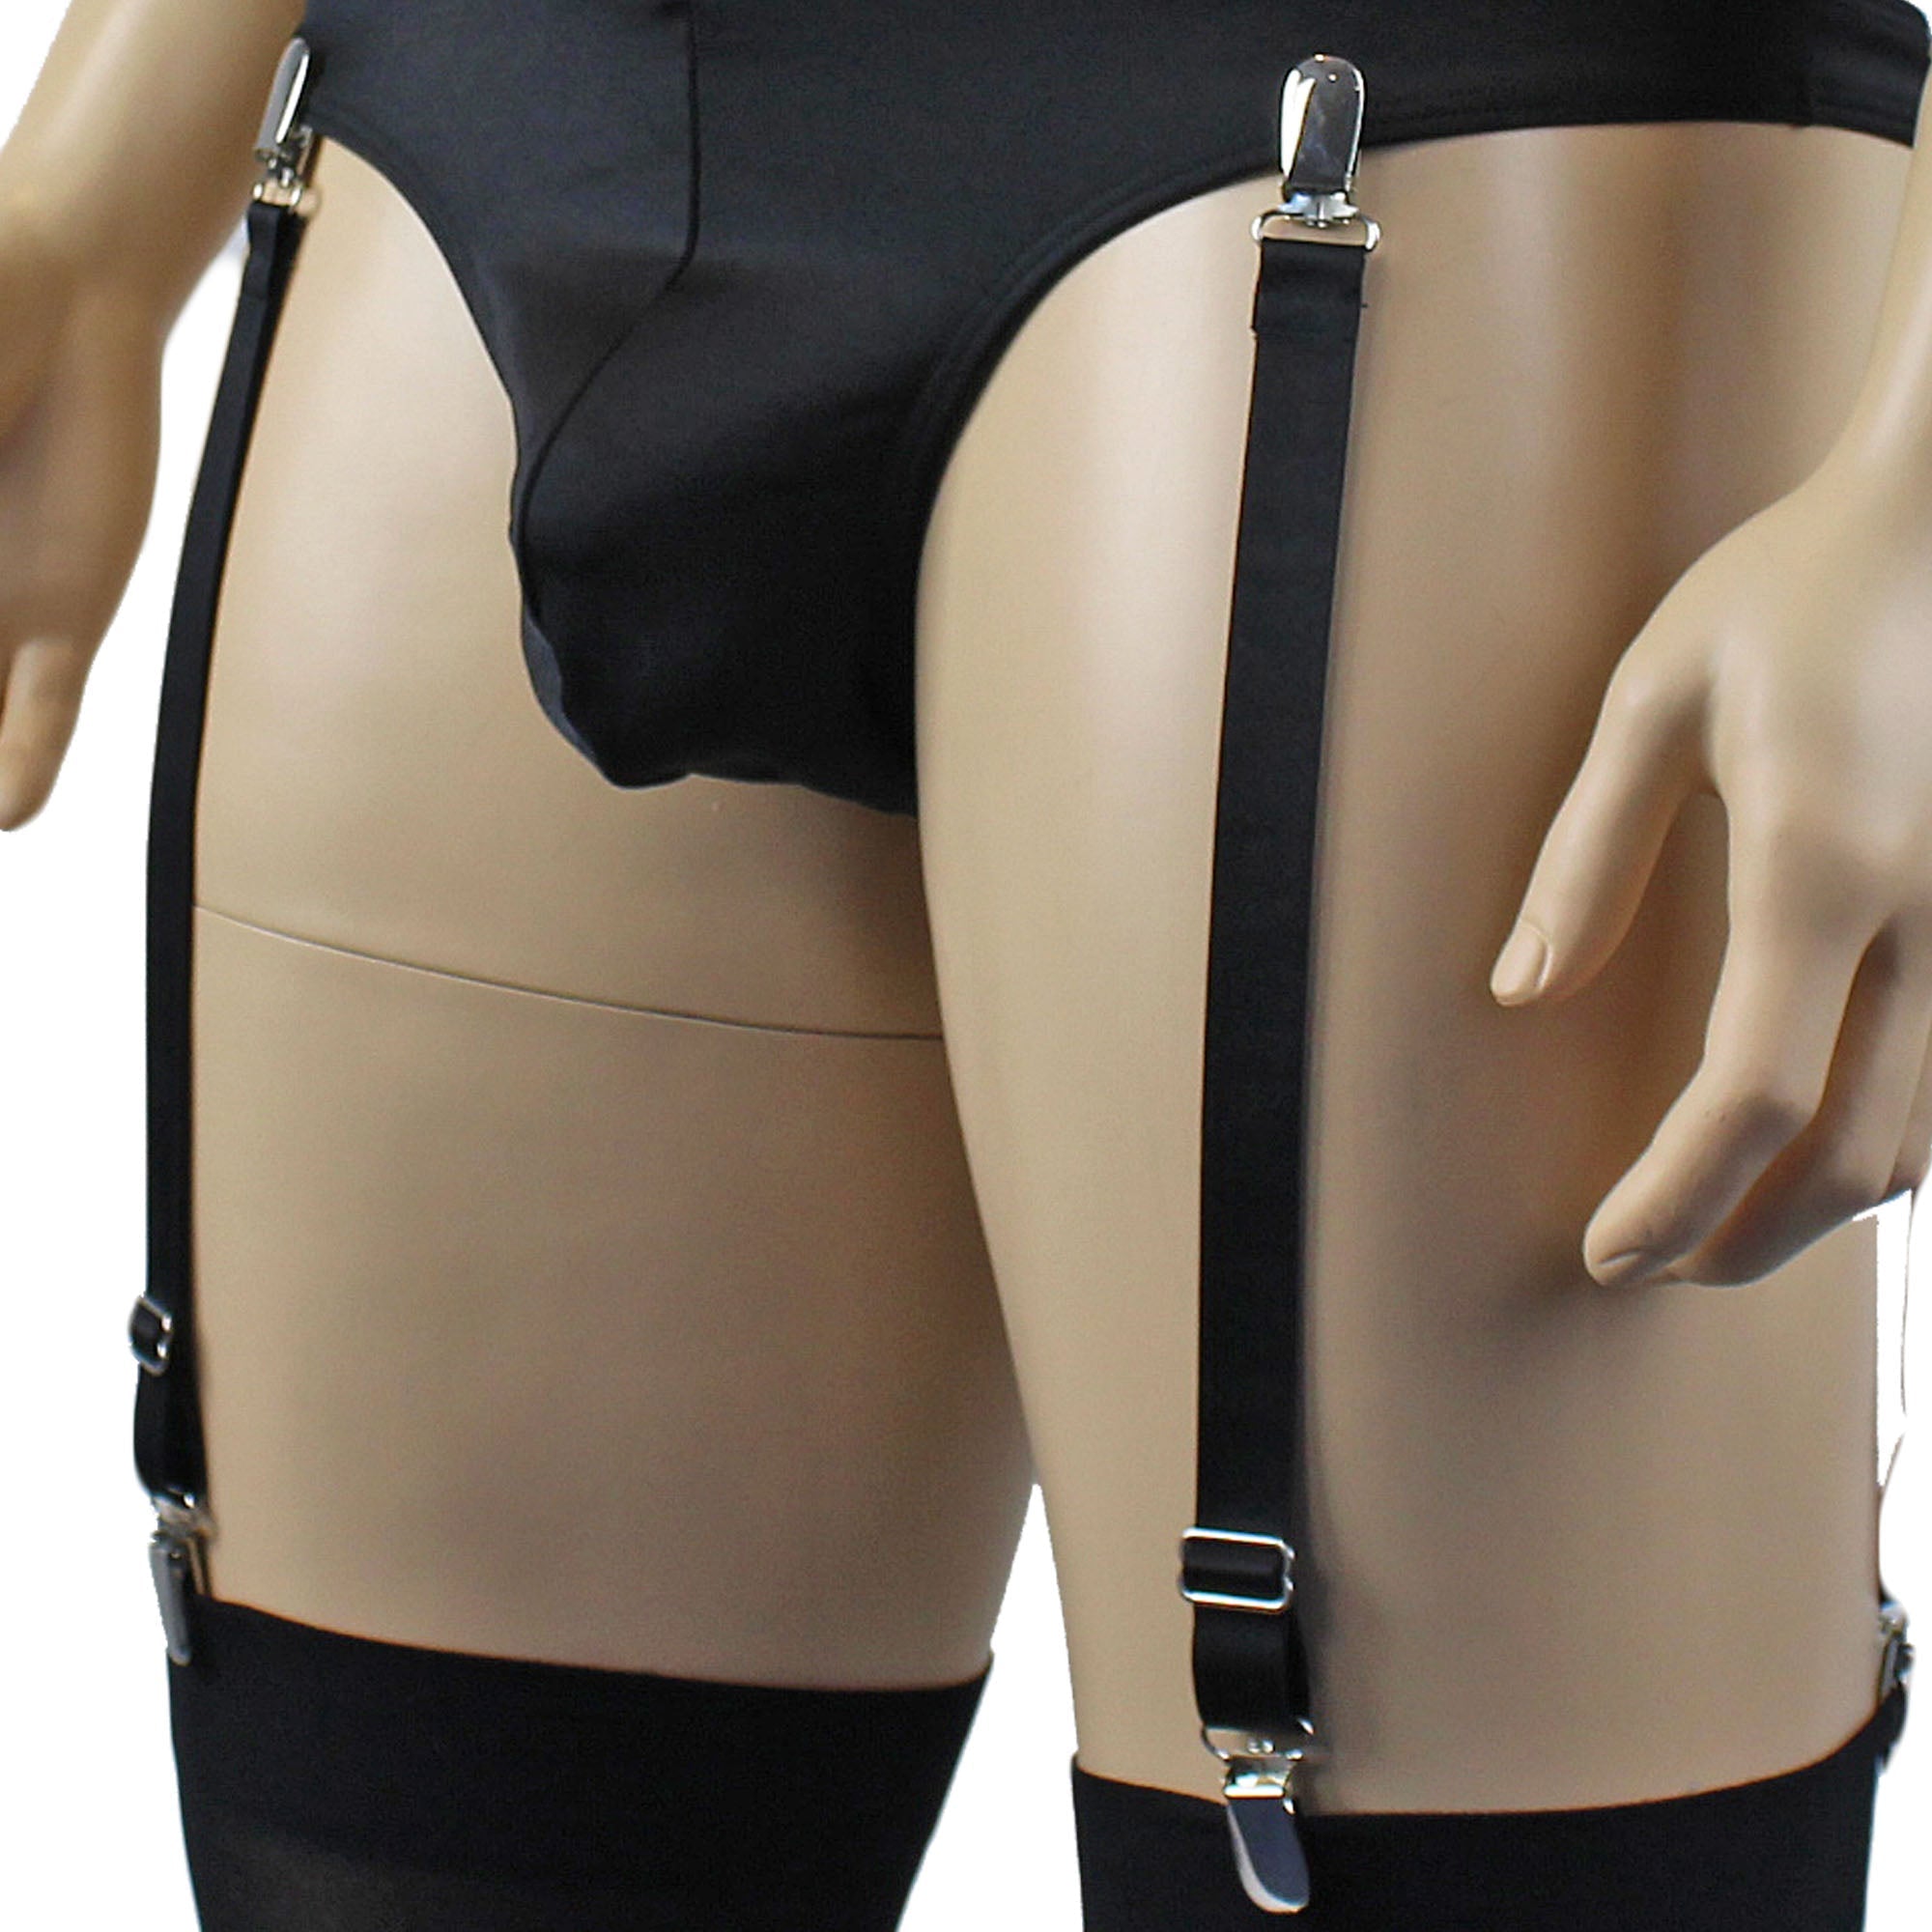 SALE - Zoe Detachable Adjustable Garters with Metal Clips Black